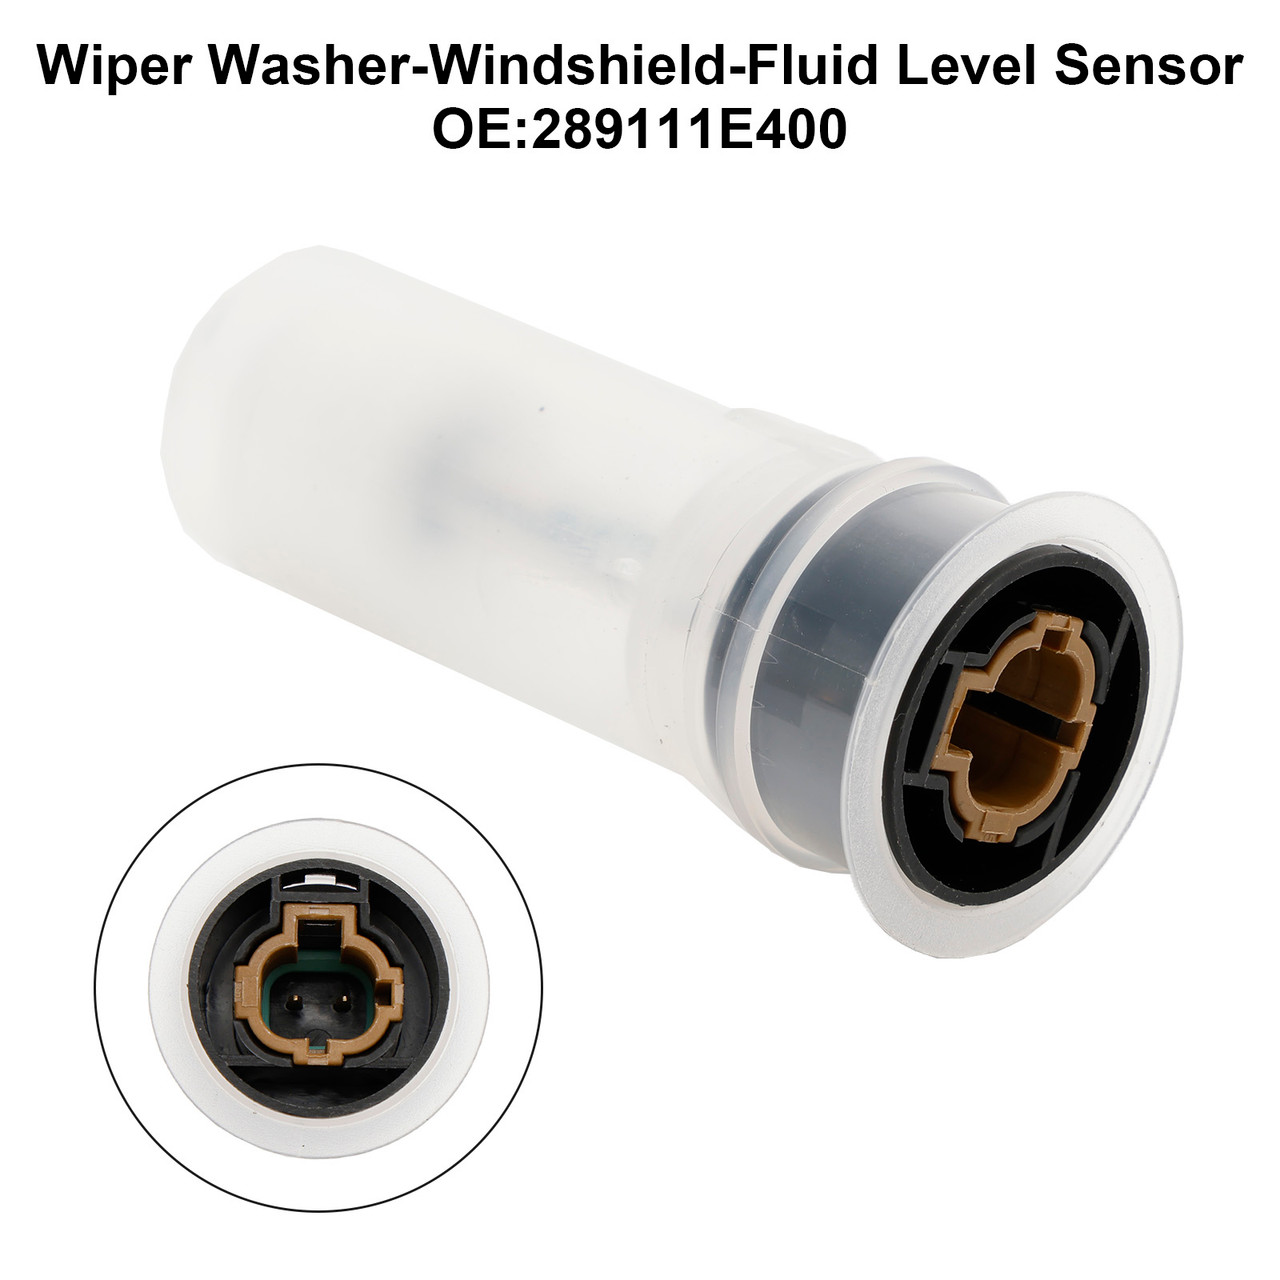 Wiper Washer-Windshield-Fluid Level Sensor 289111E400 for Nissan Altima Armada